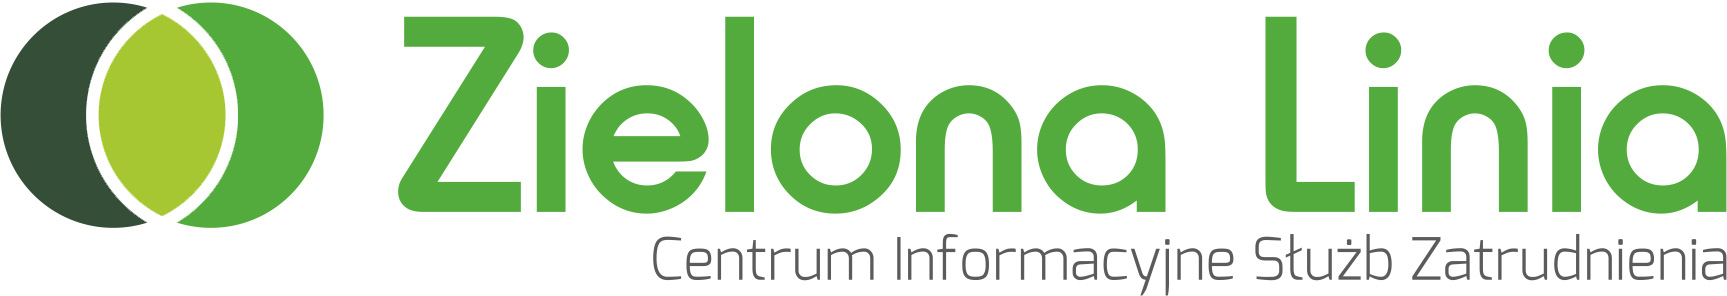 Zielona linia logo2013